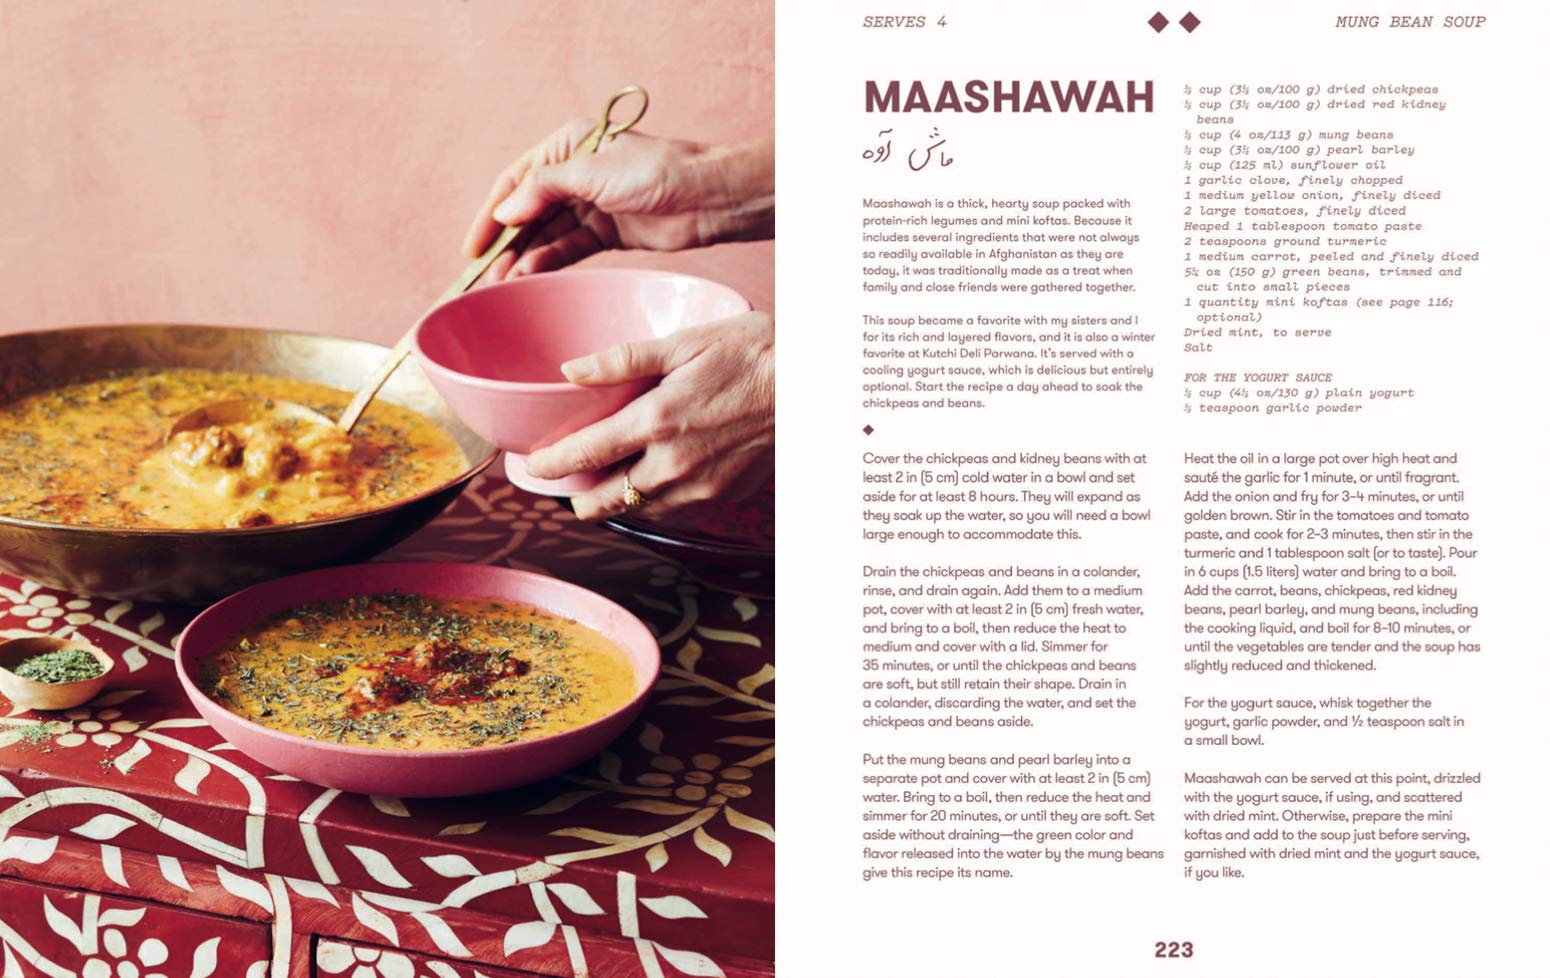 Parwana: Recipes and Stories from an Afghan Kitchen (Durkhanai Ayubi)